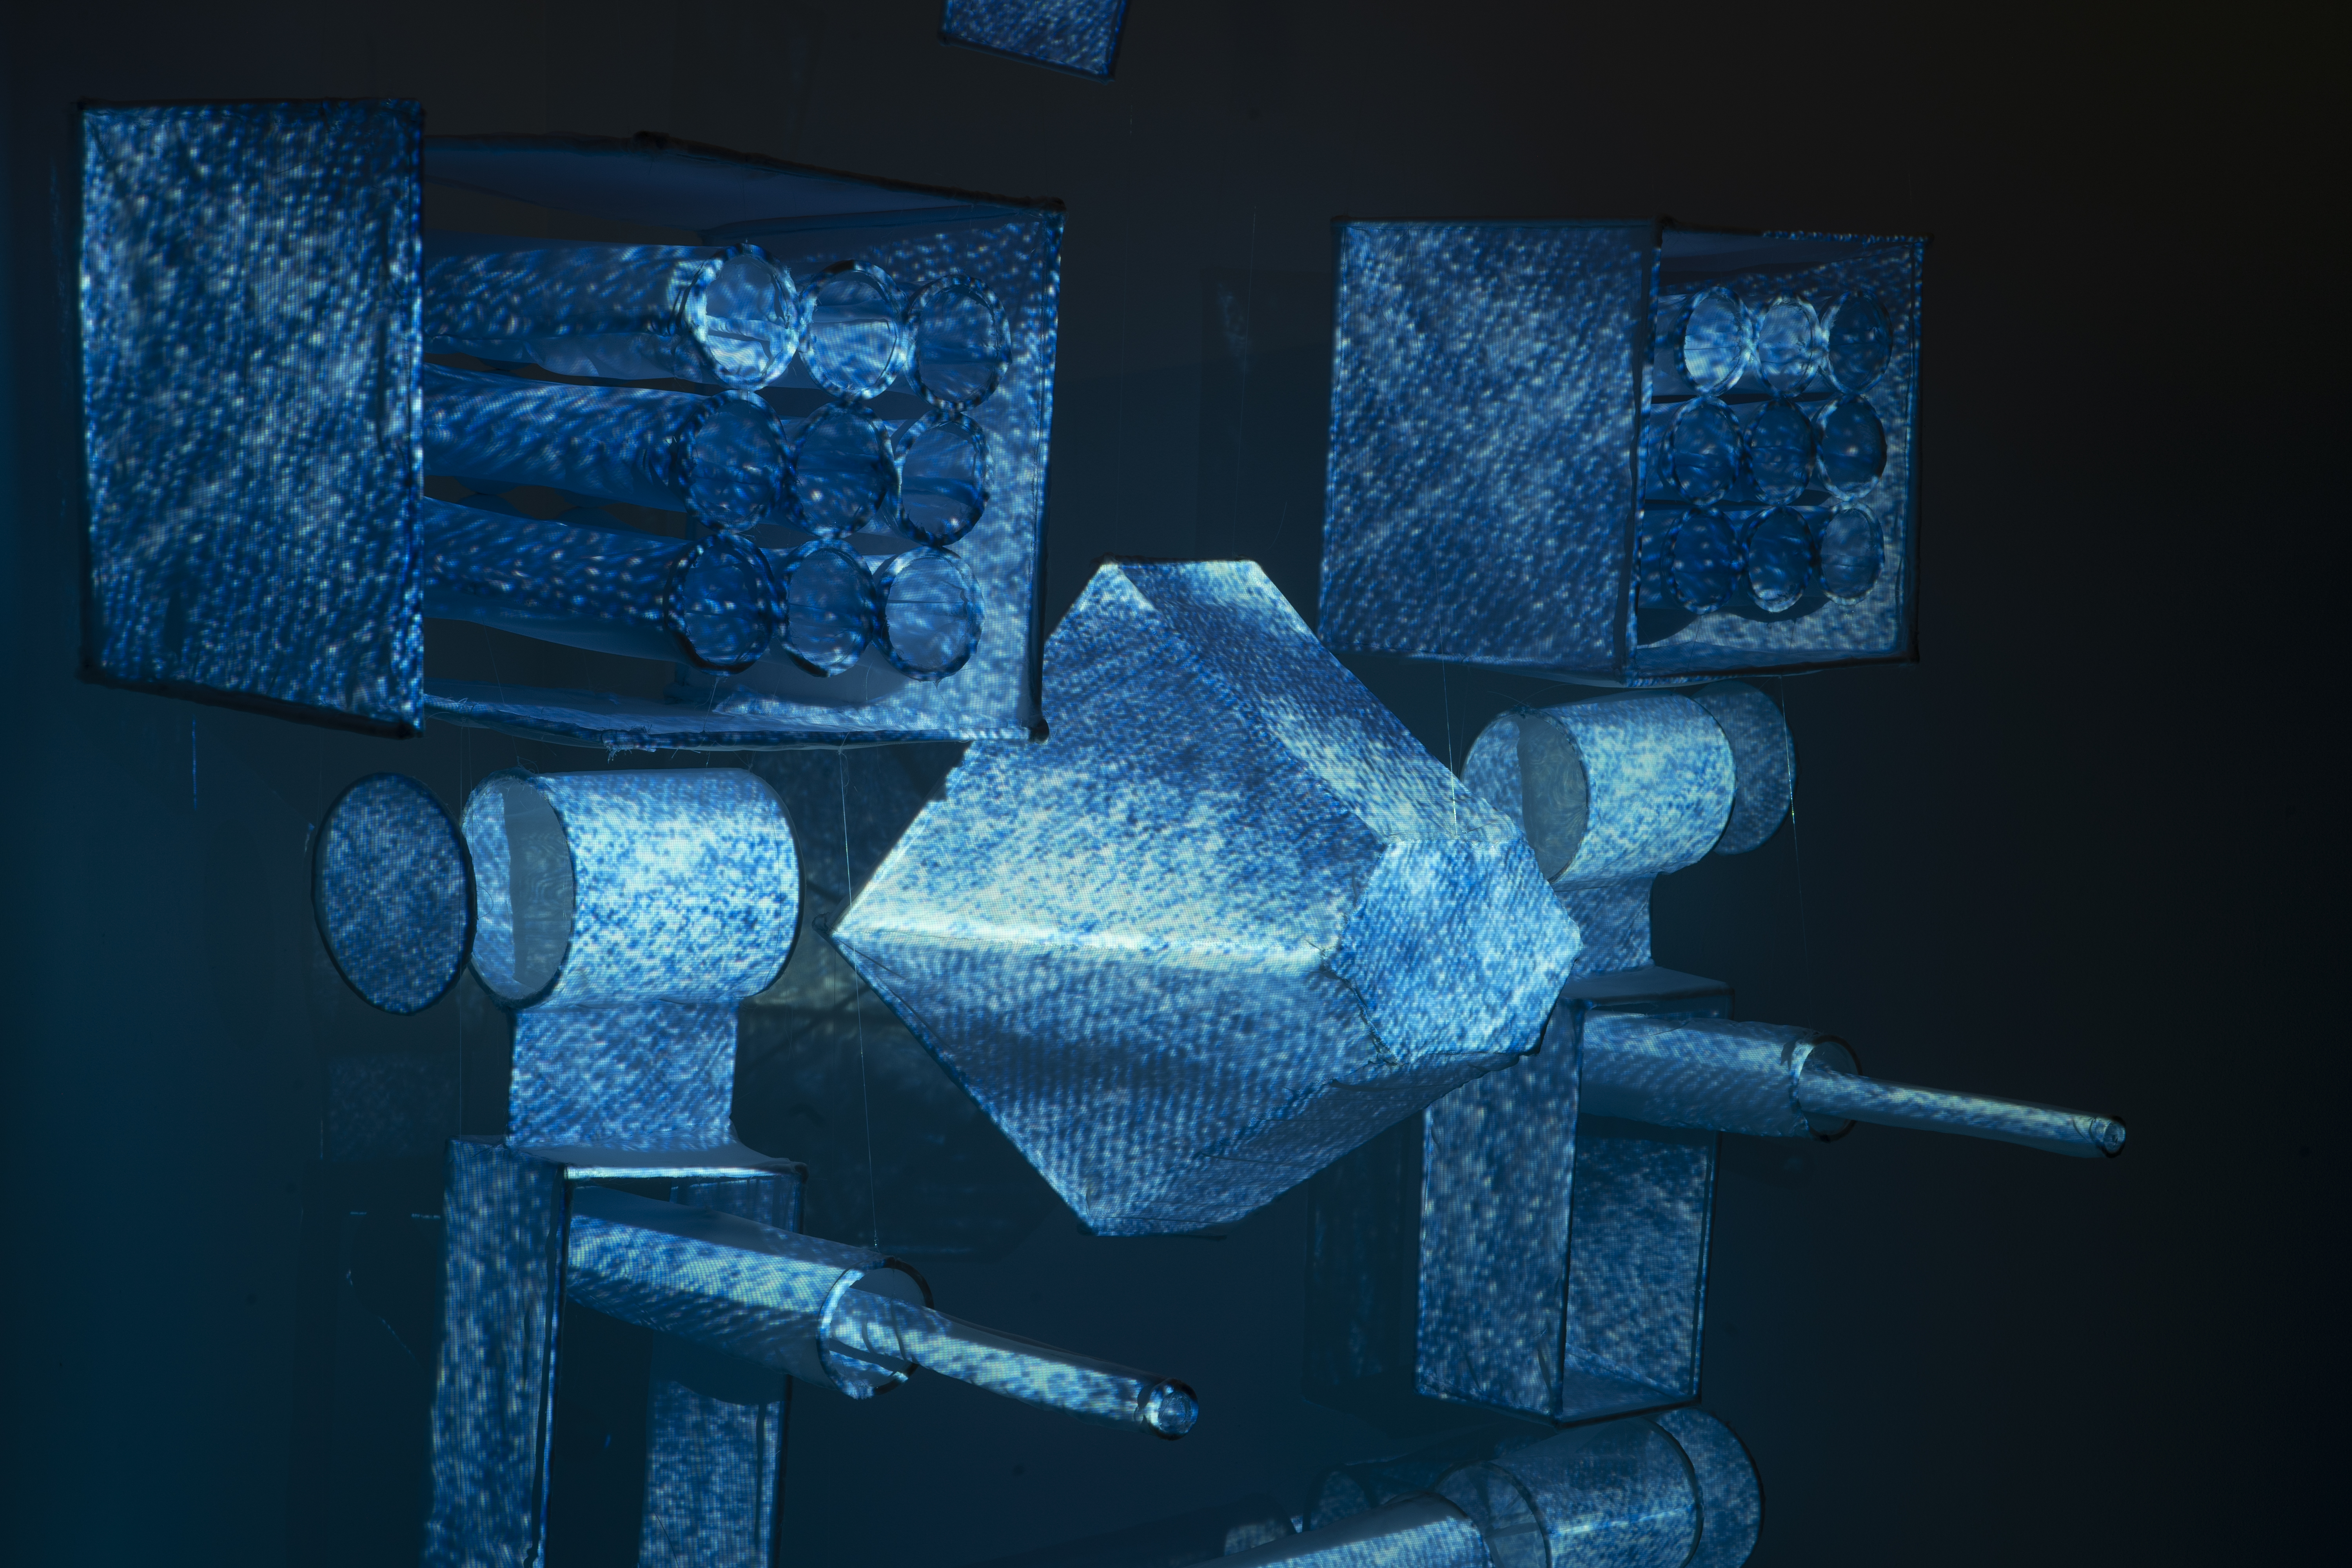 Noah McWilliams art piece - illuminated blue geometric shapes